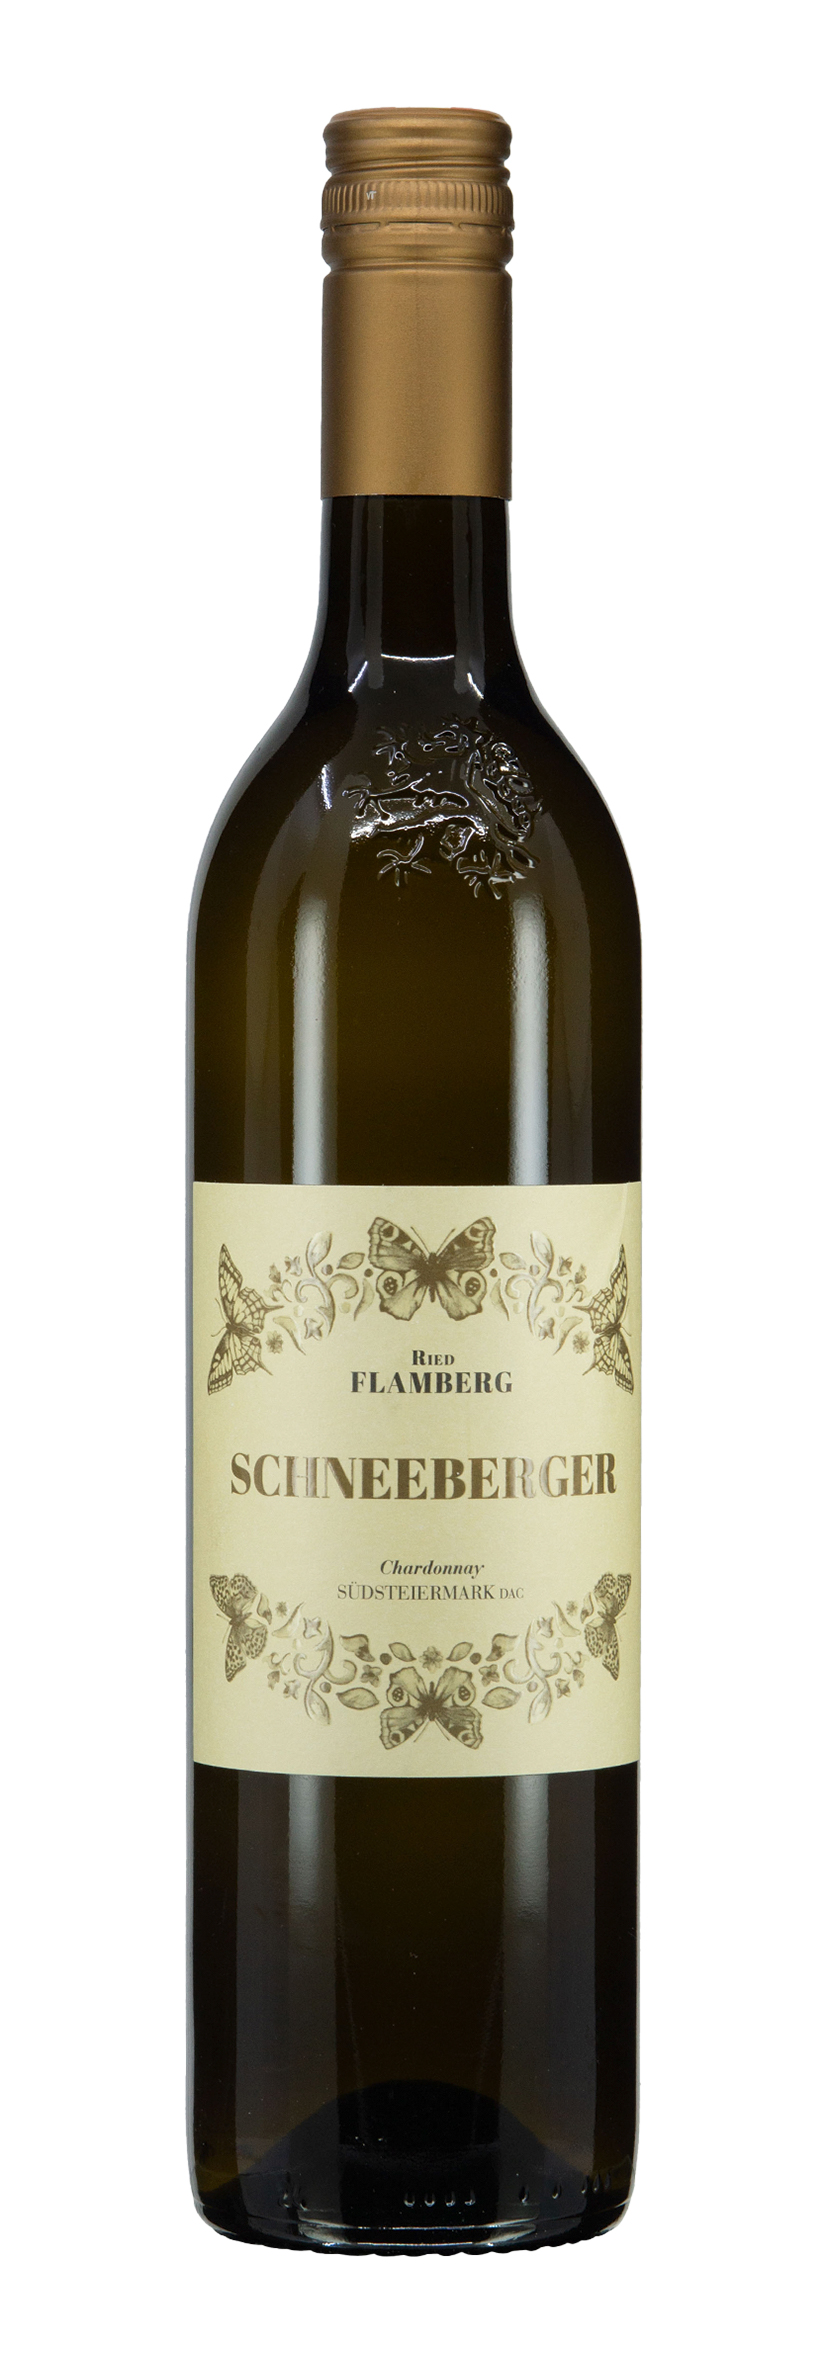 Südsteiermark DAC Ried Flamberg Chardonnay 2020